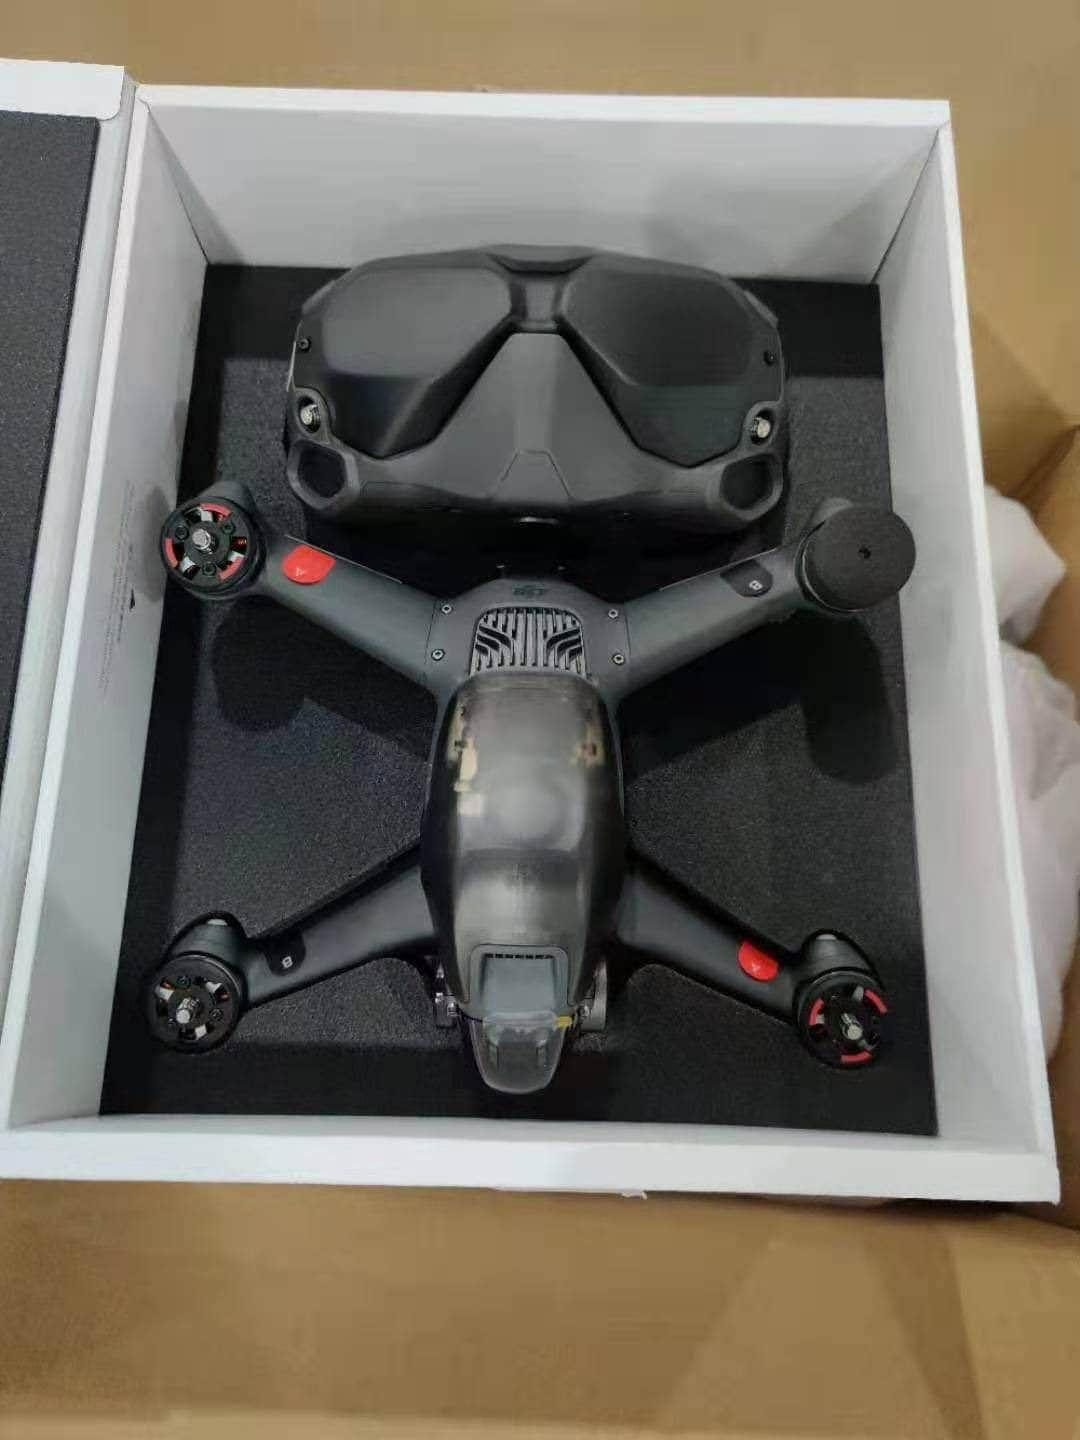 dji fpv drone in its box leaked 1